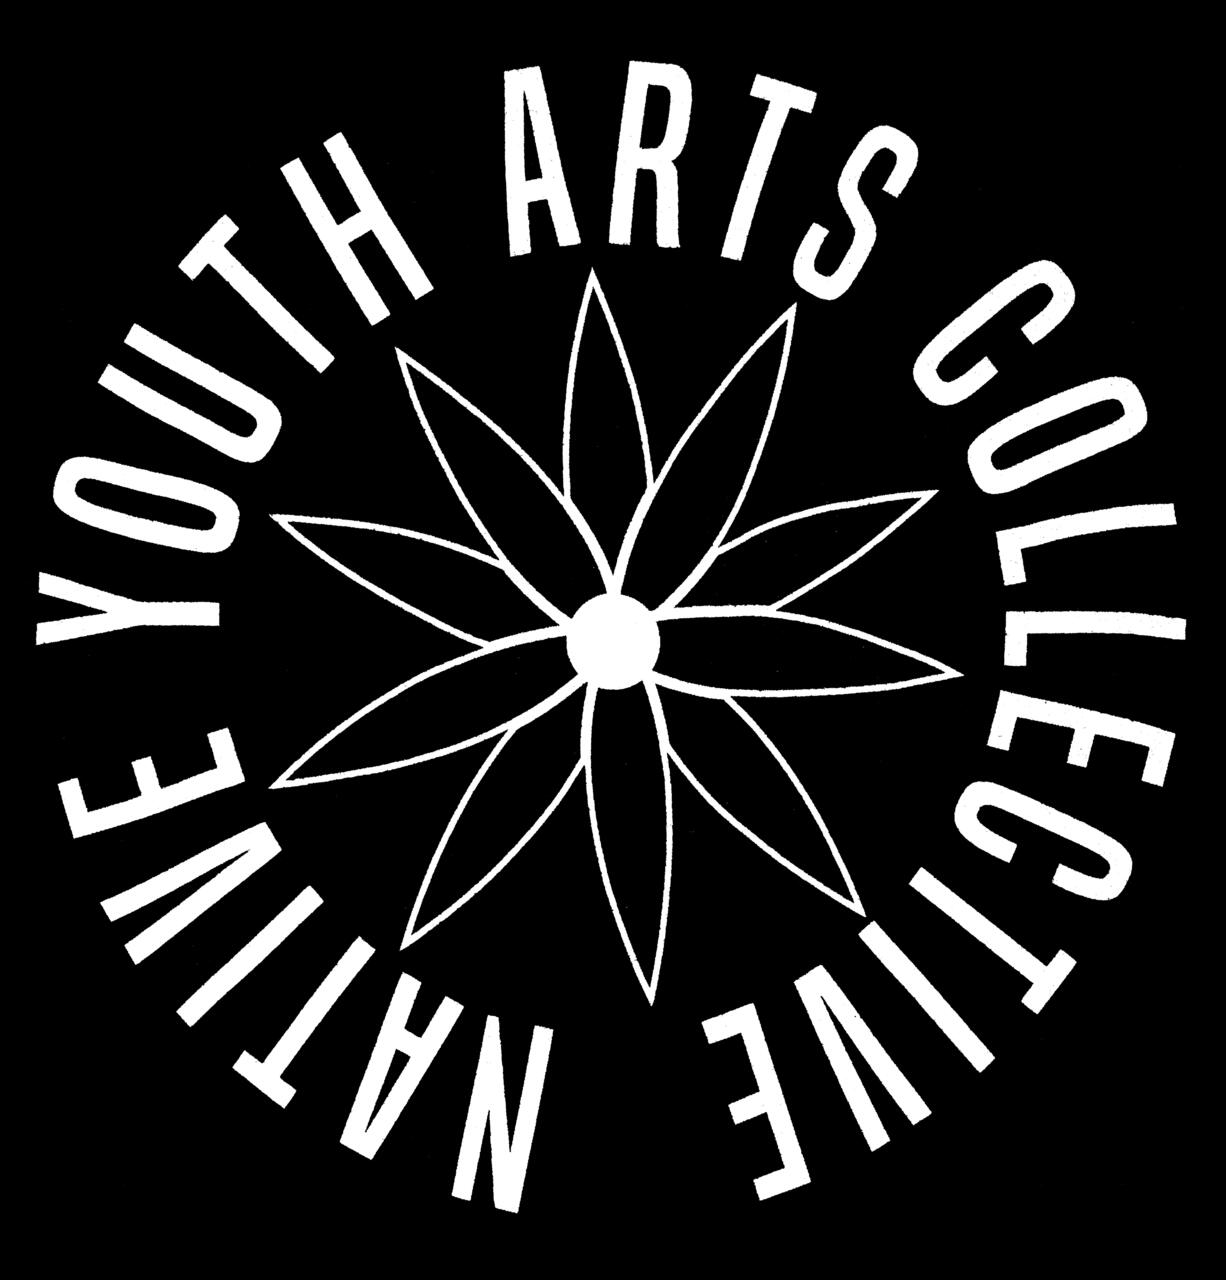 Native Youth Arts Collective logo